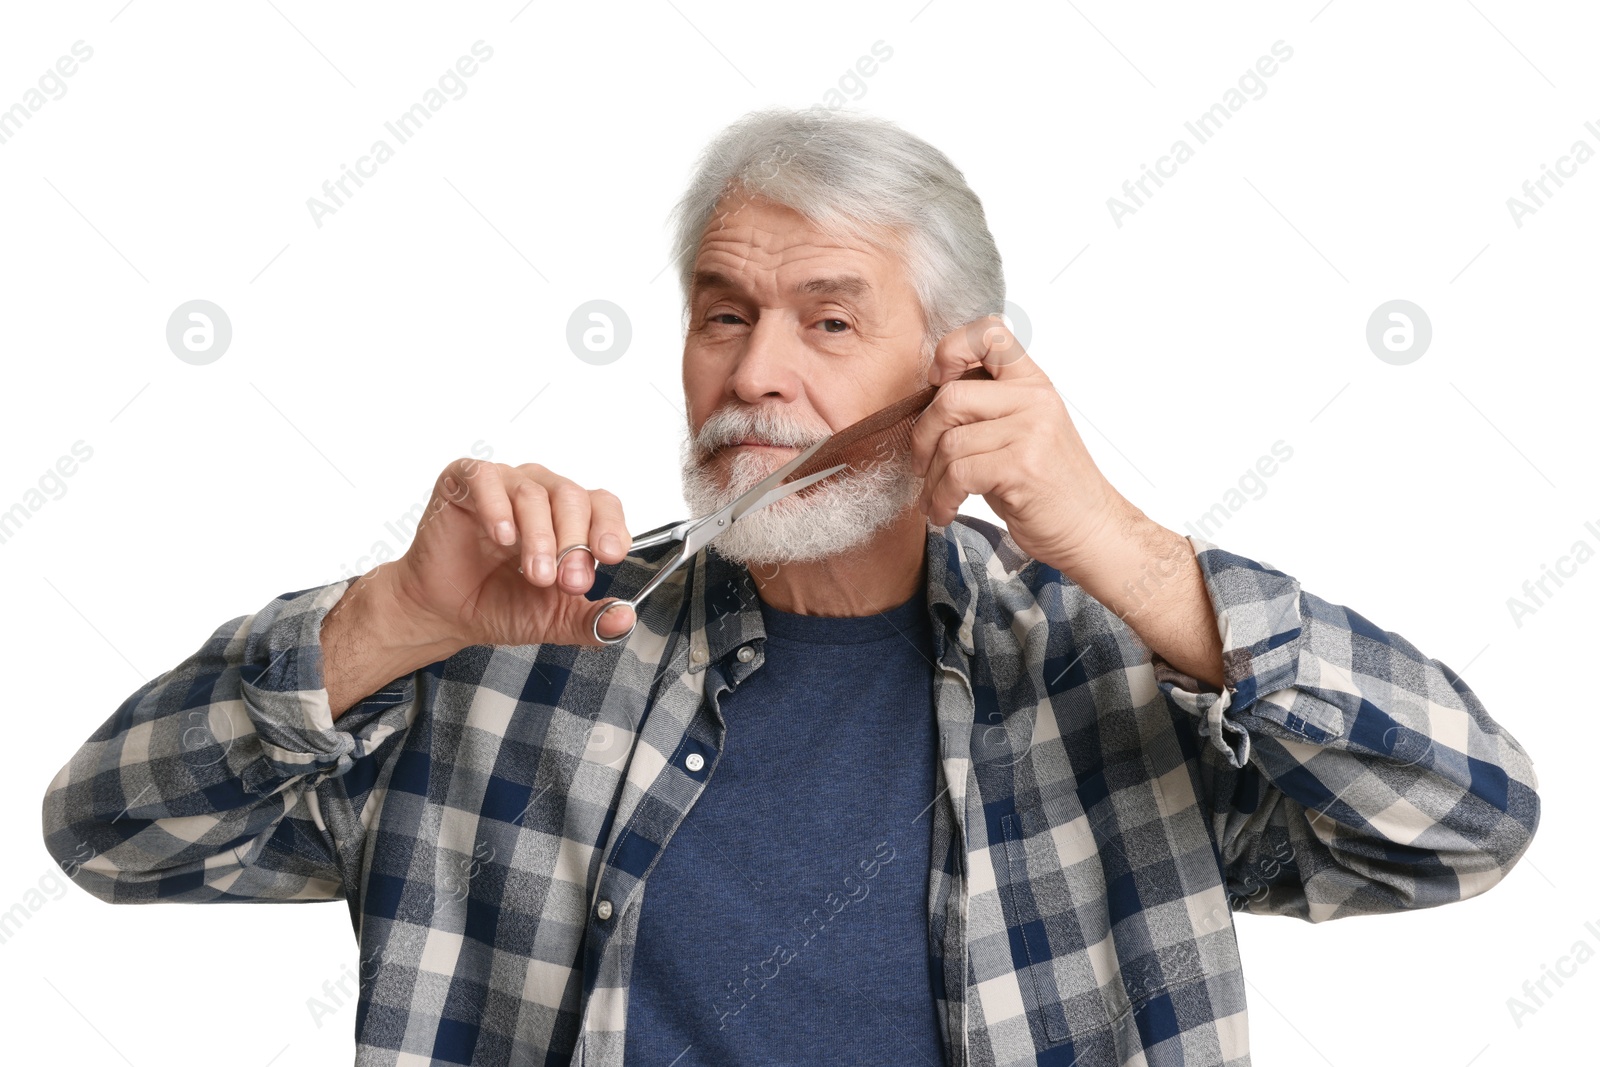 Photo of Senior man trimming beard with scissors on white background